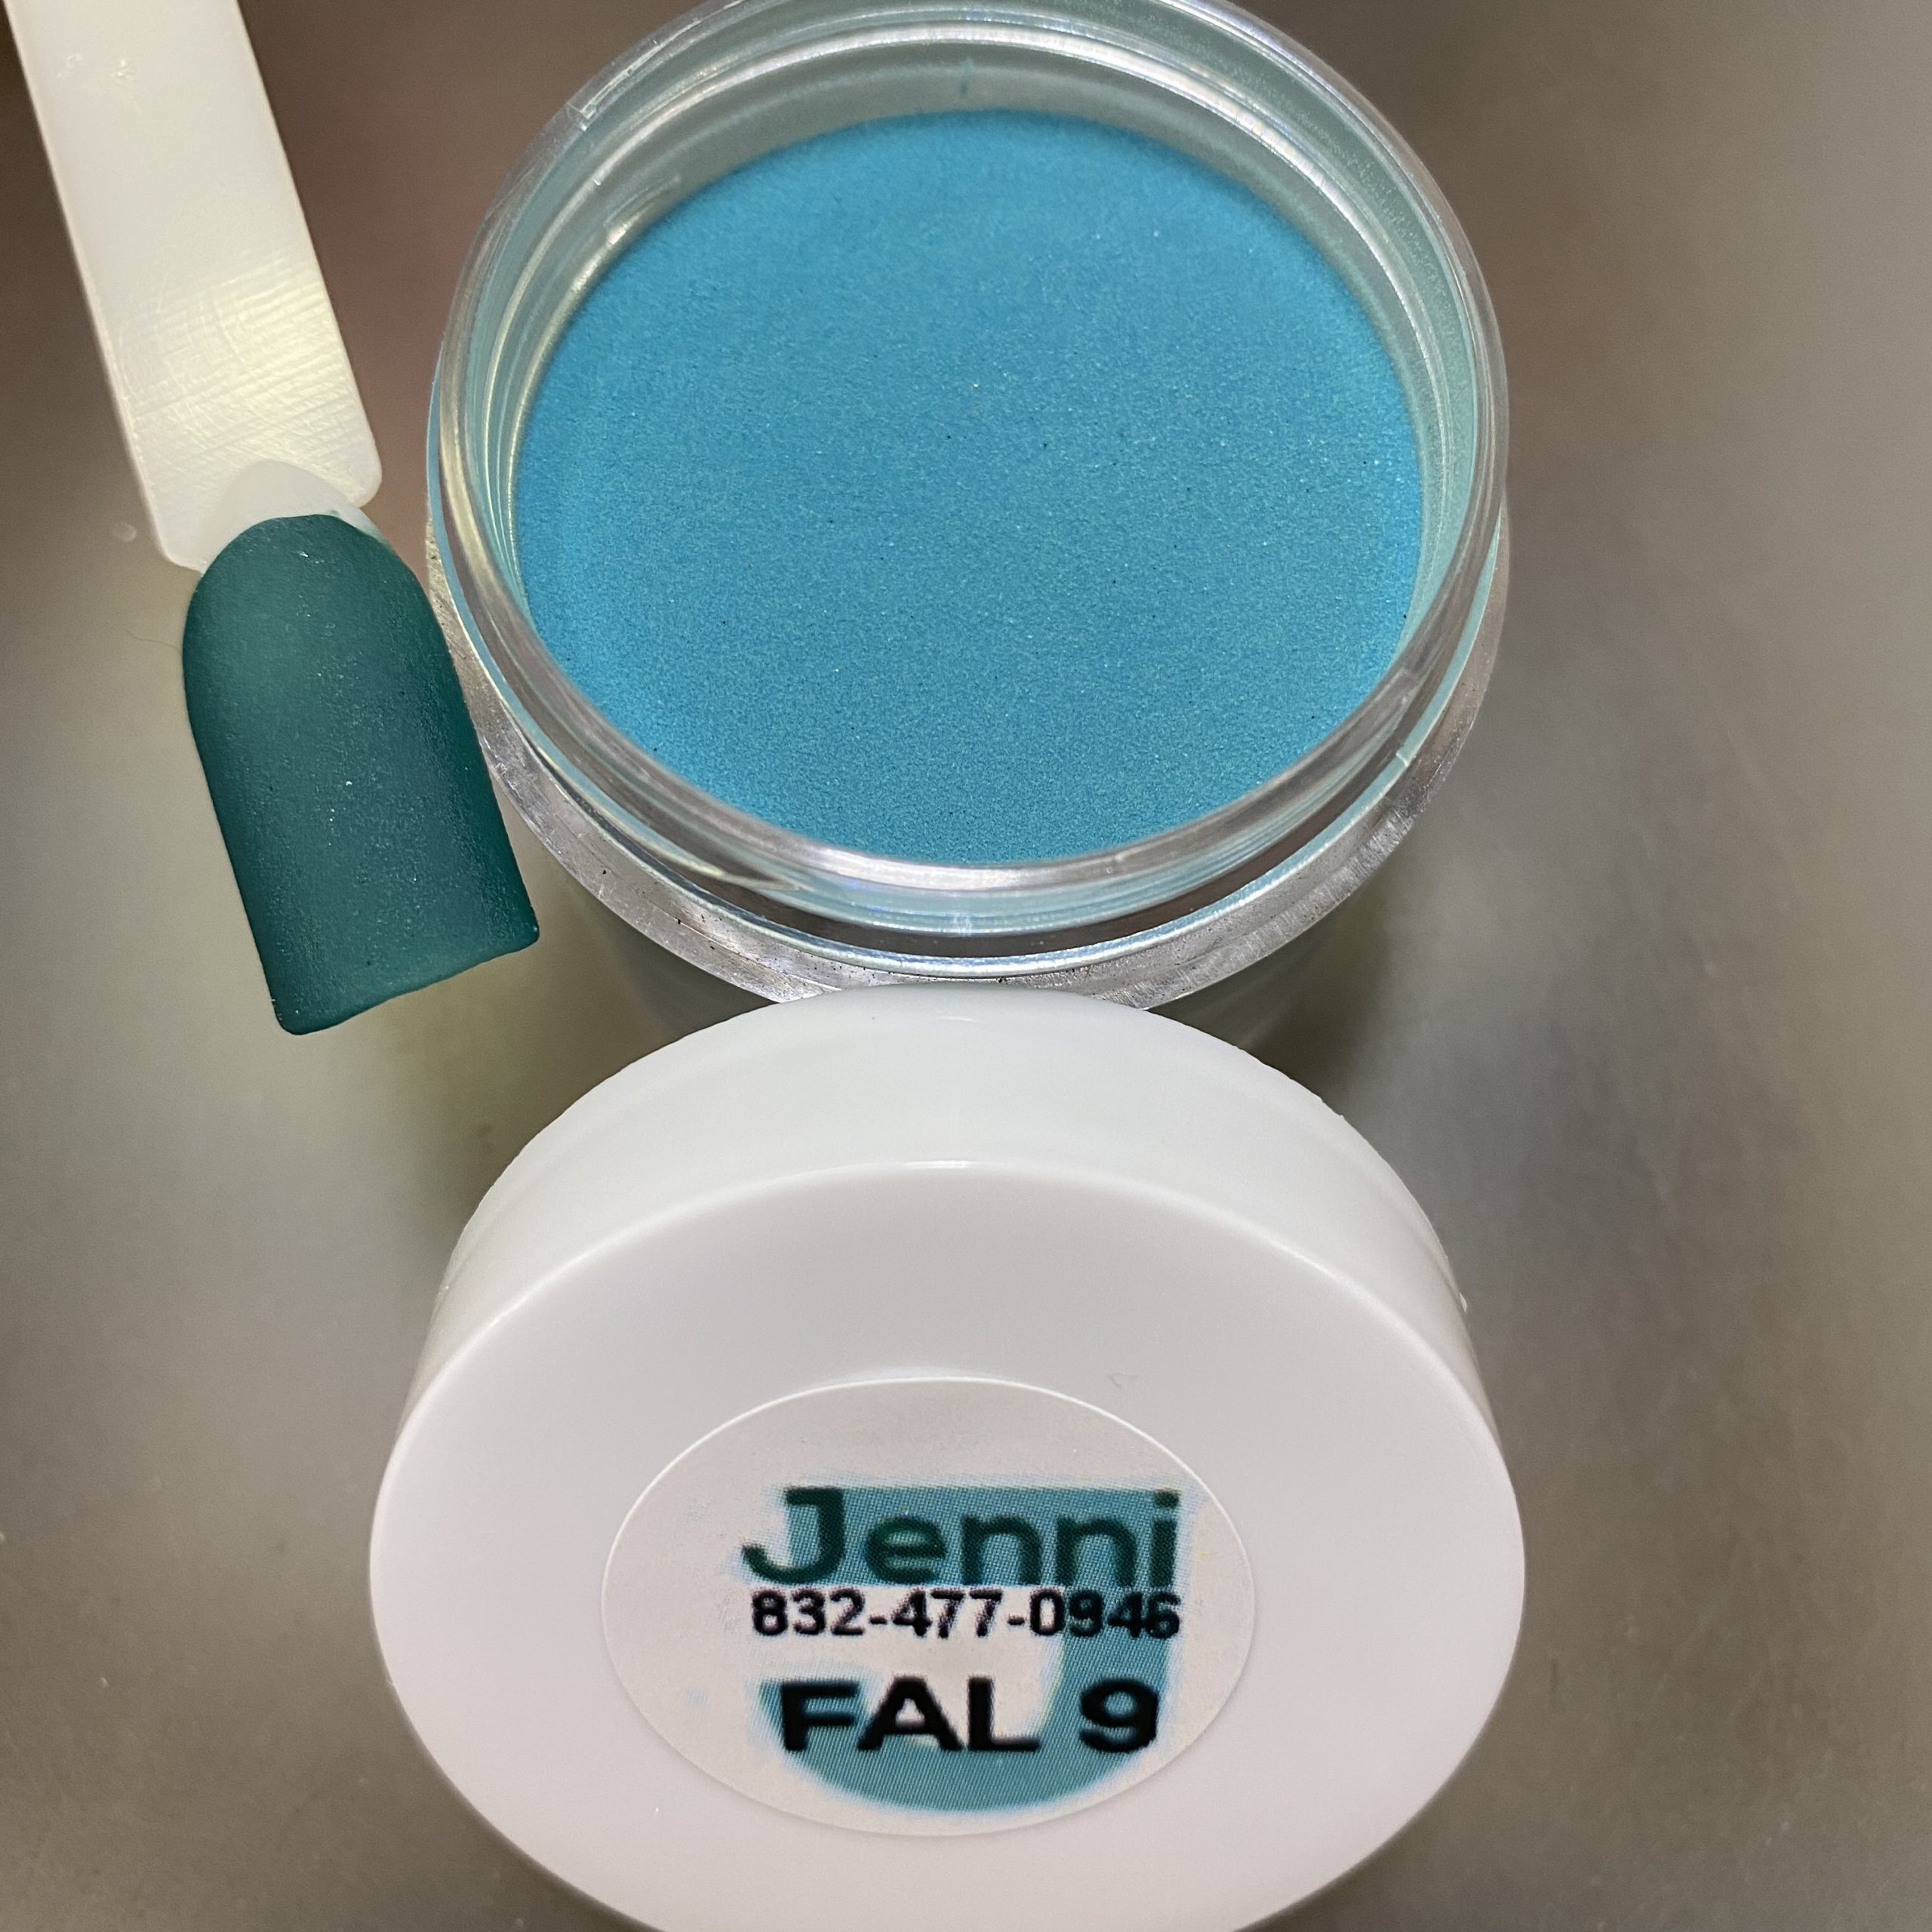 Jenni Acrylic Color Powder - FAL 9 - Quetzal Green 